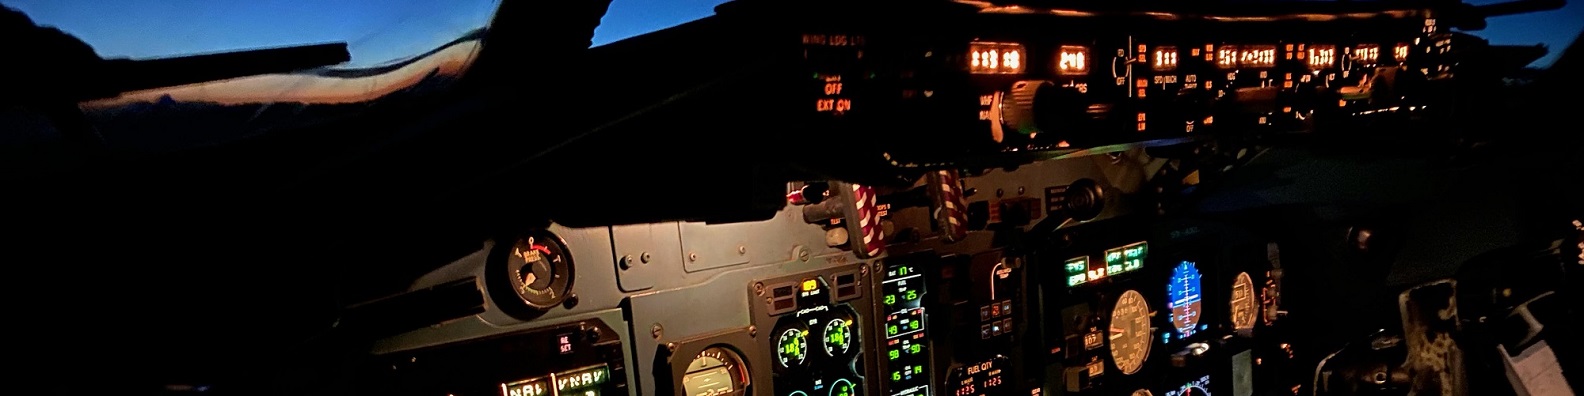 Airplane MD80 Cockpit Linkedin Background1584x396